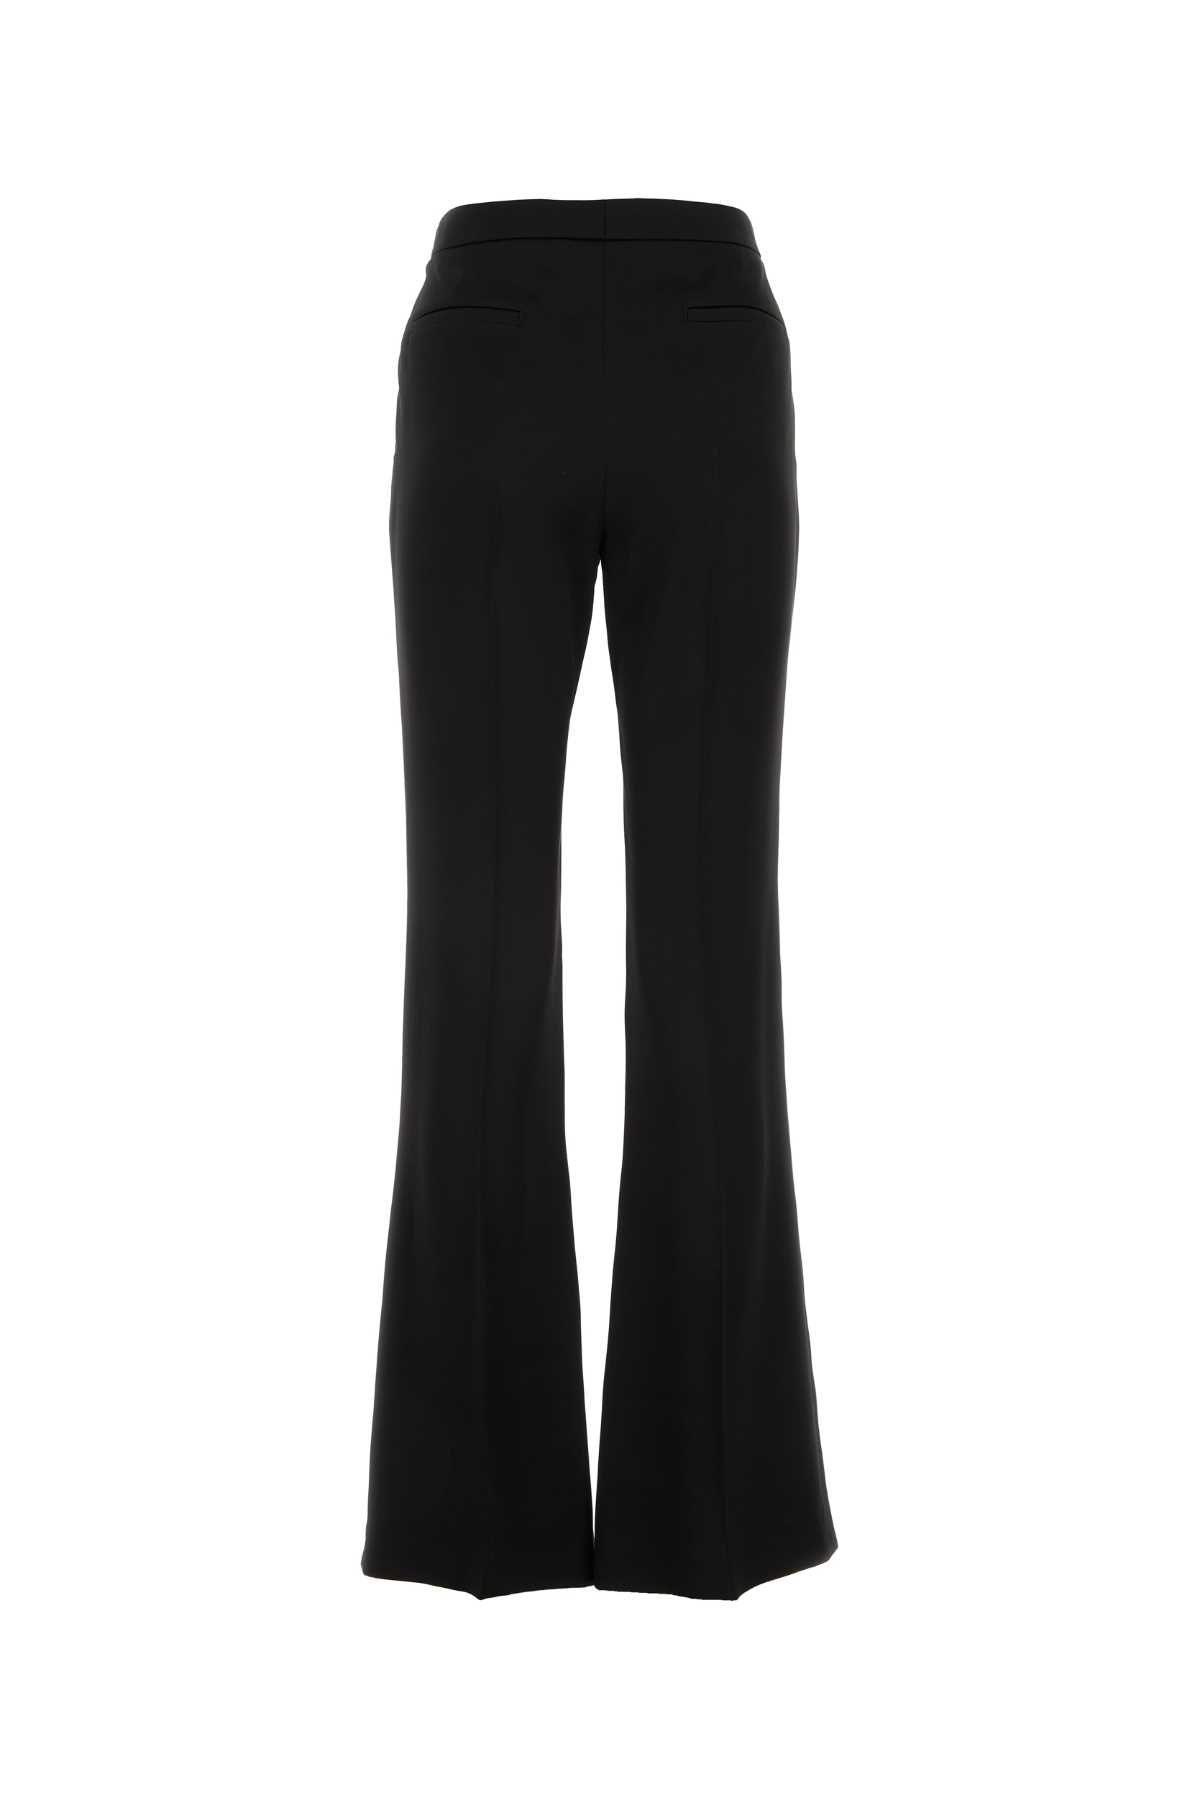 Givenchy Black Satin Trouser